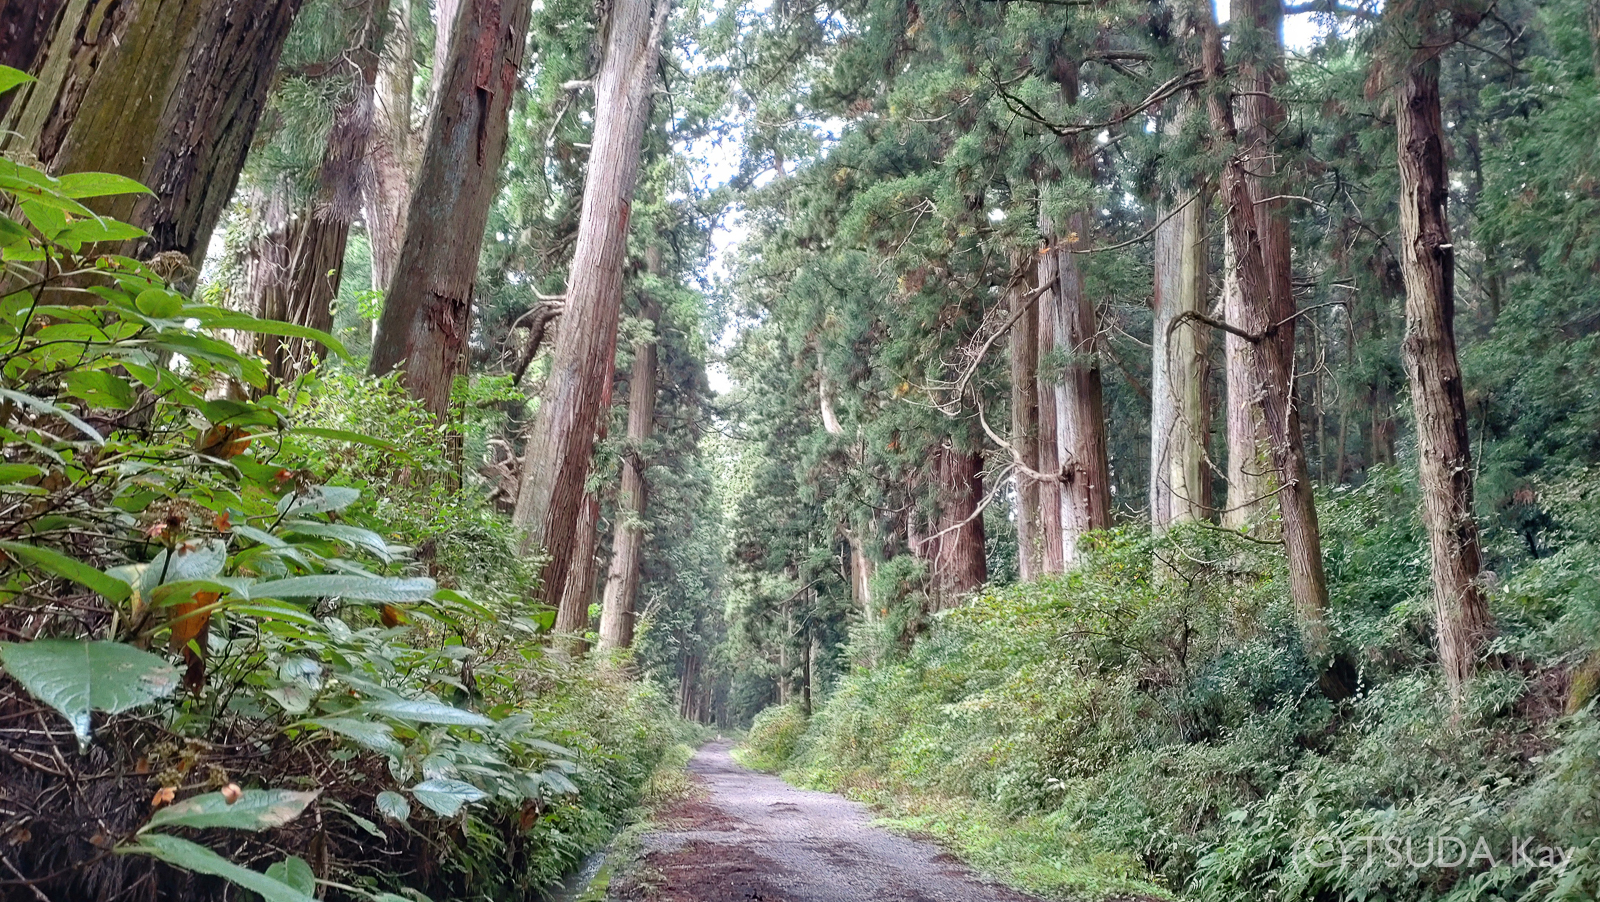 I cycled old nikko road 14